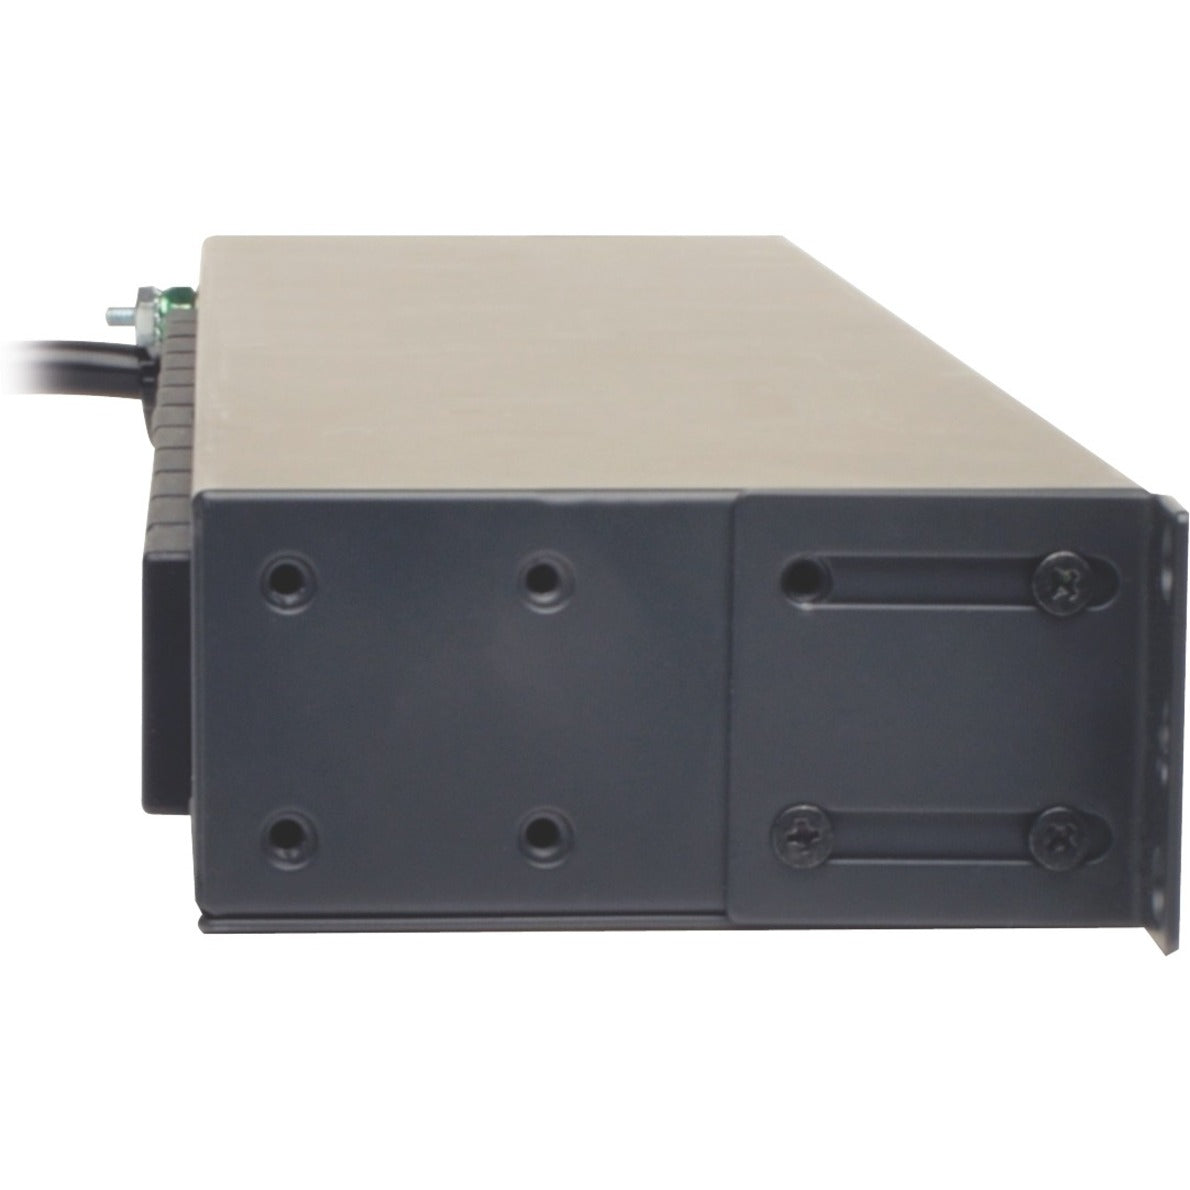 Tripp Lite PDUMH15-RA Metered Rackmount PDU, 15A, 120V AC, 1500W, 13 Outlets